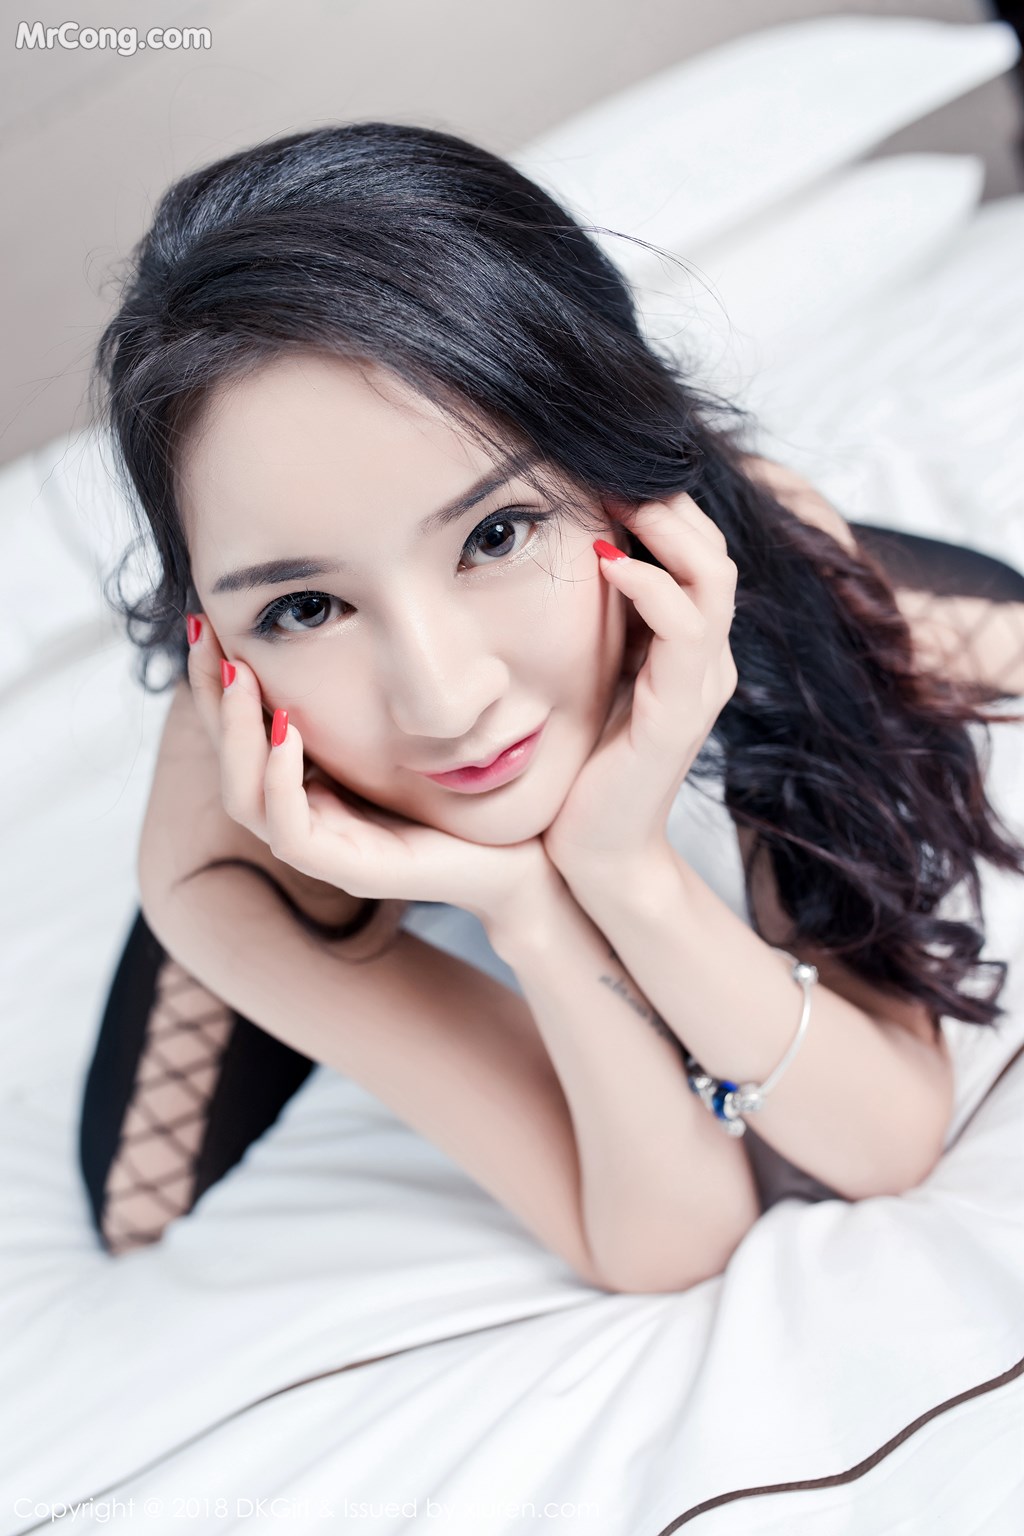 DKGirl Vol. 566: Model Mei Ge (梅哥) (53 photos)